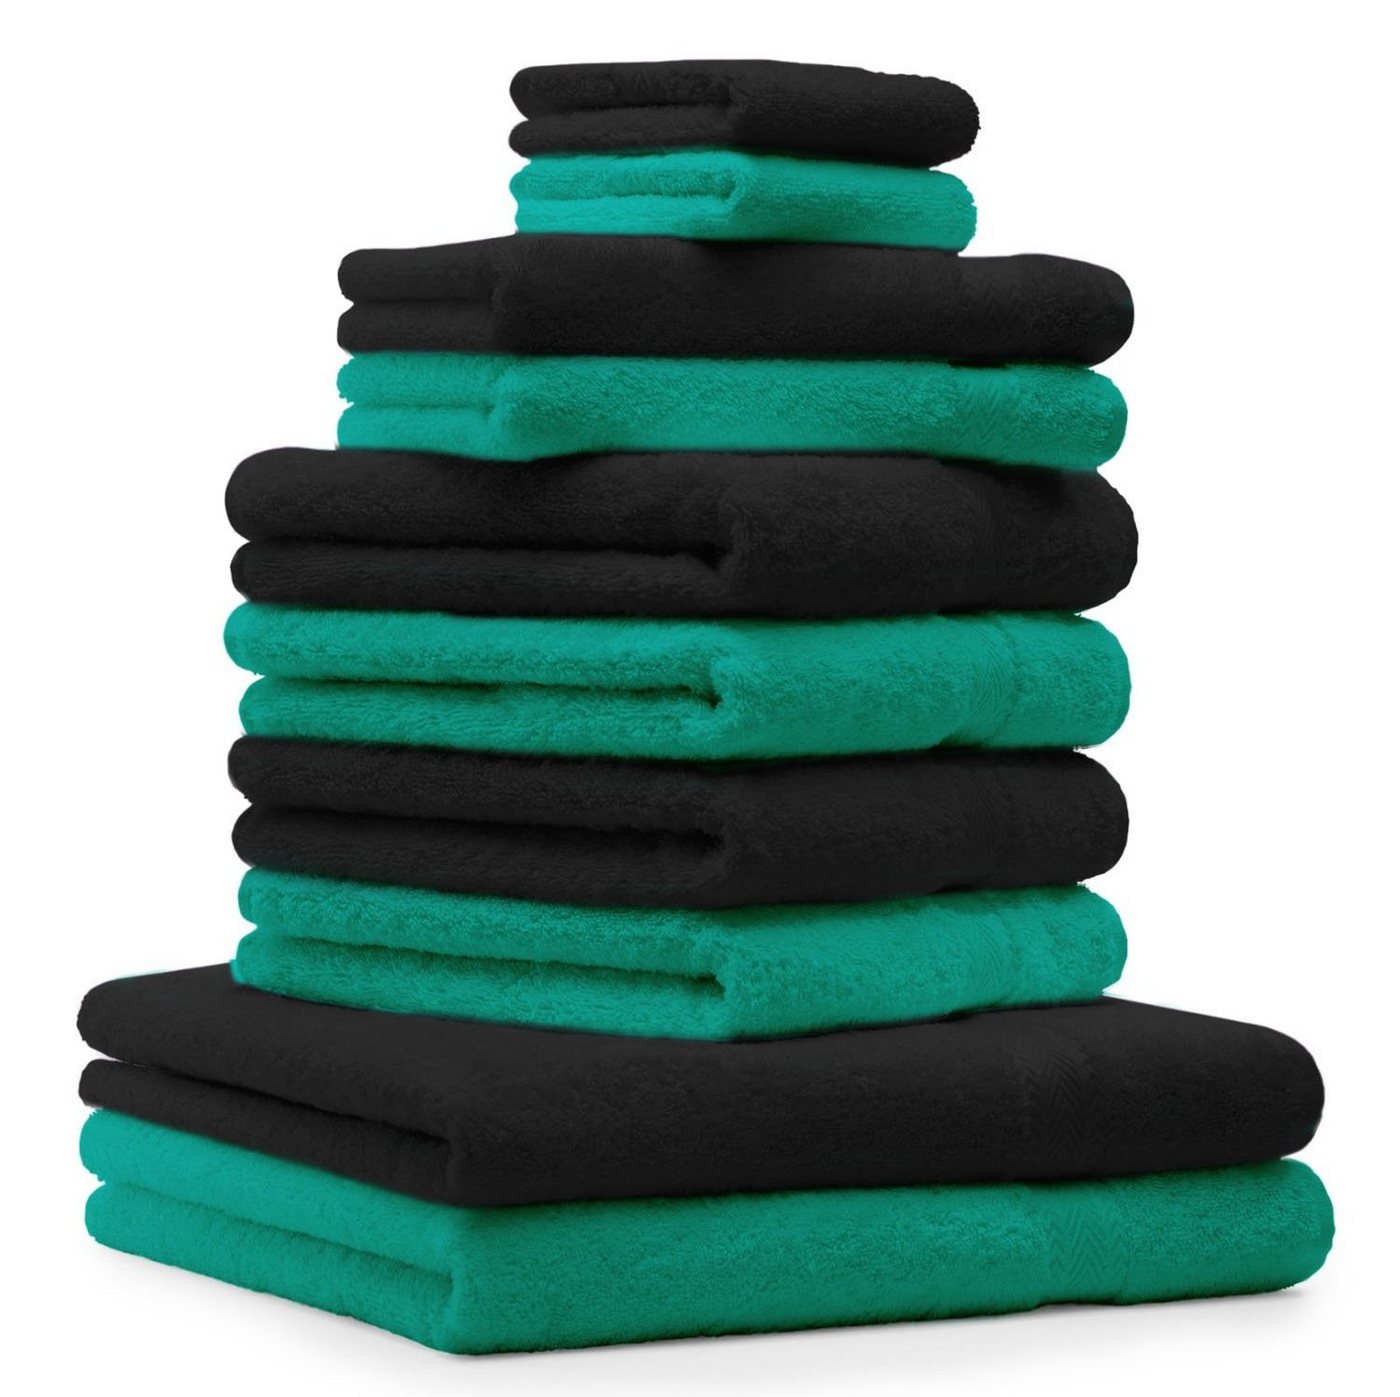 Betz Handtuch Set »10-TLG. Handtuch-Set Premium 100% Baumwolle 2 Duschtücher 4 Handtücher 2 Gästetücher 2 Waschhandschuhe Farbe Smaragd Grün & Schwarz« von Betz